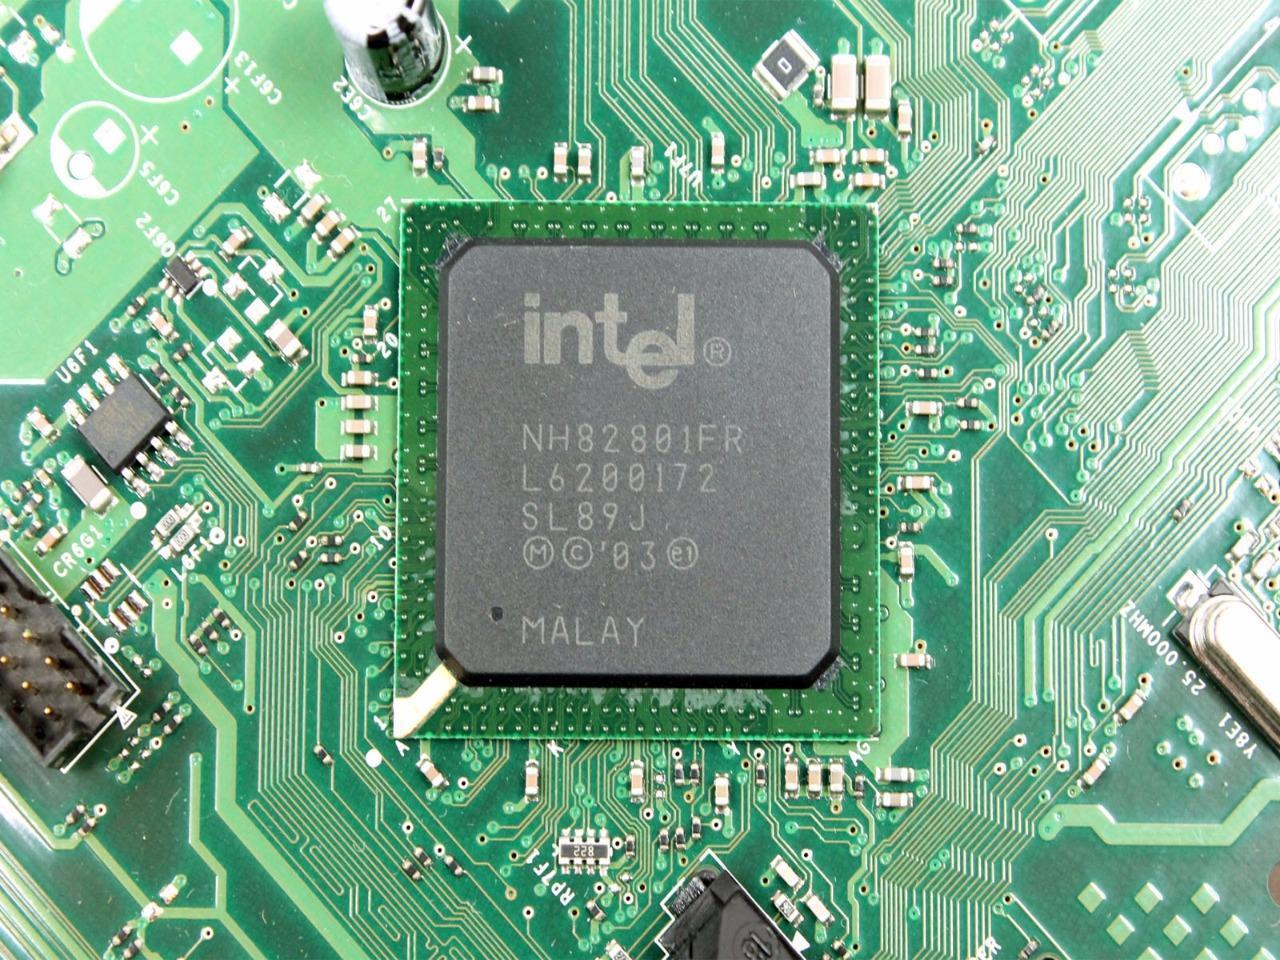 Intel chipset i915p i915g drivers for windows 7 64-bit